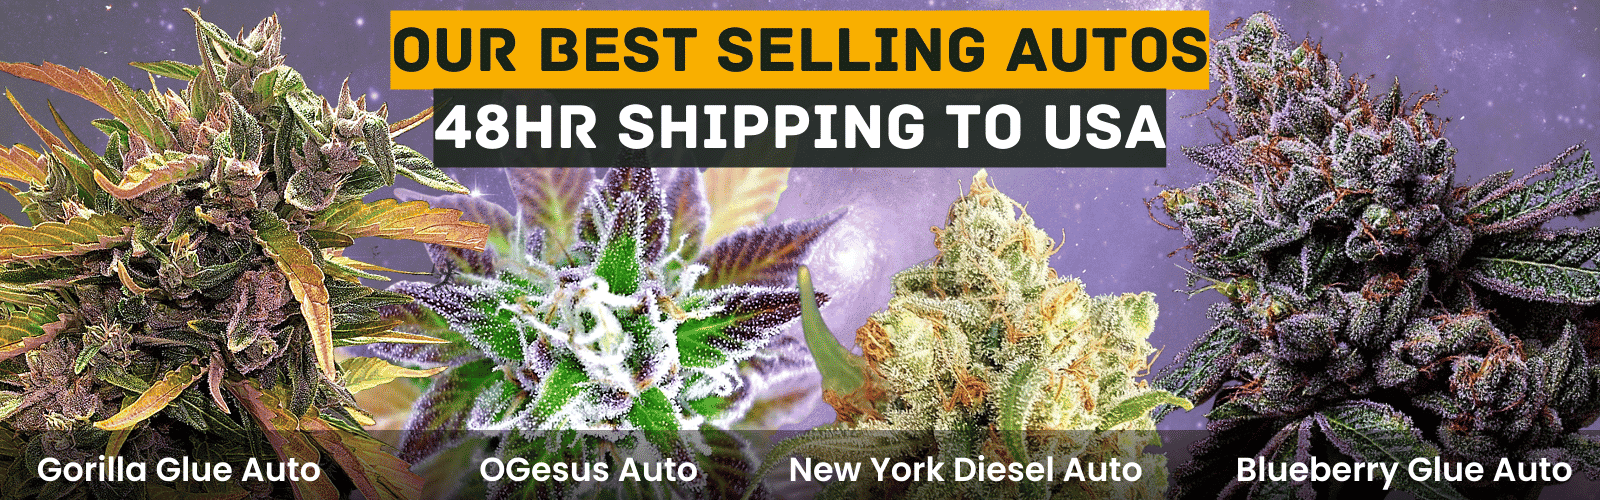 bestseller Auto Cannabis